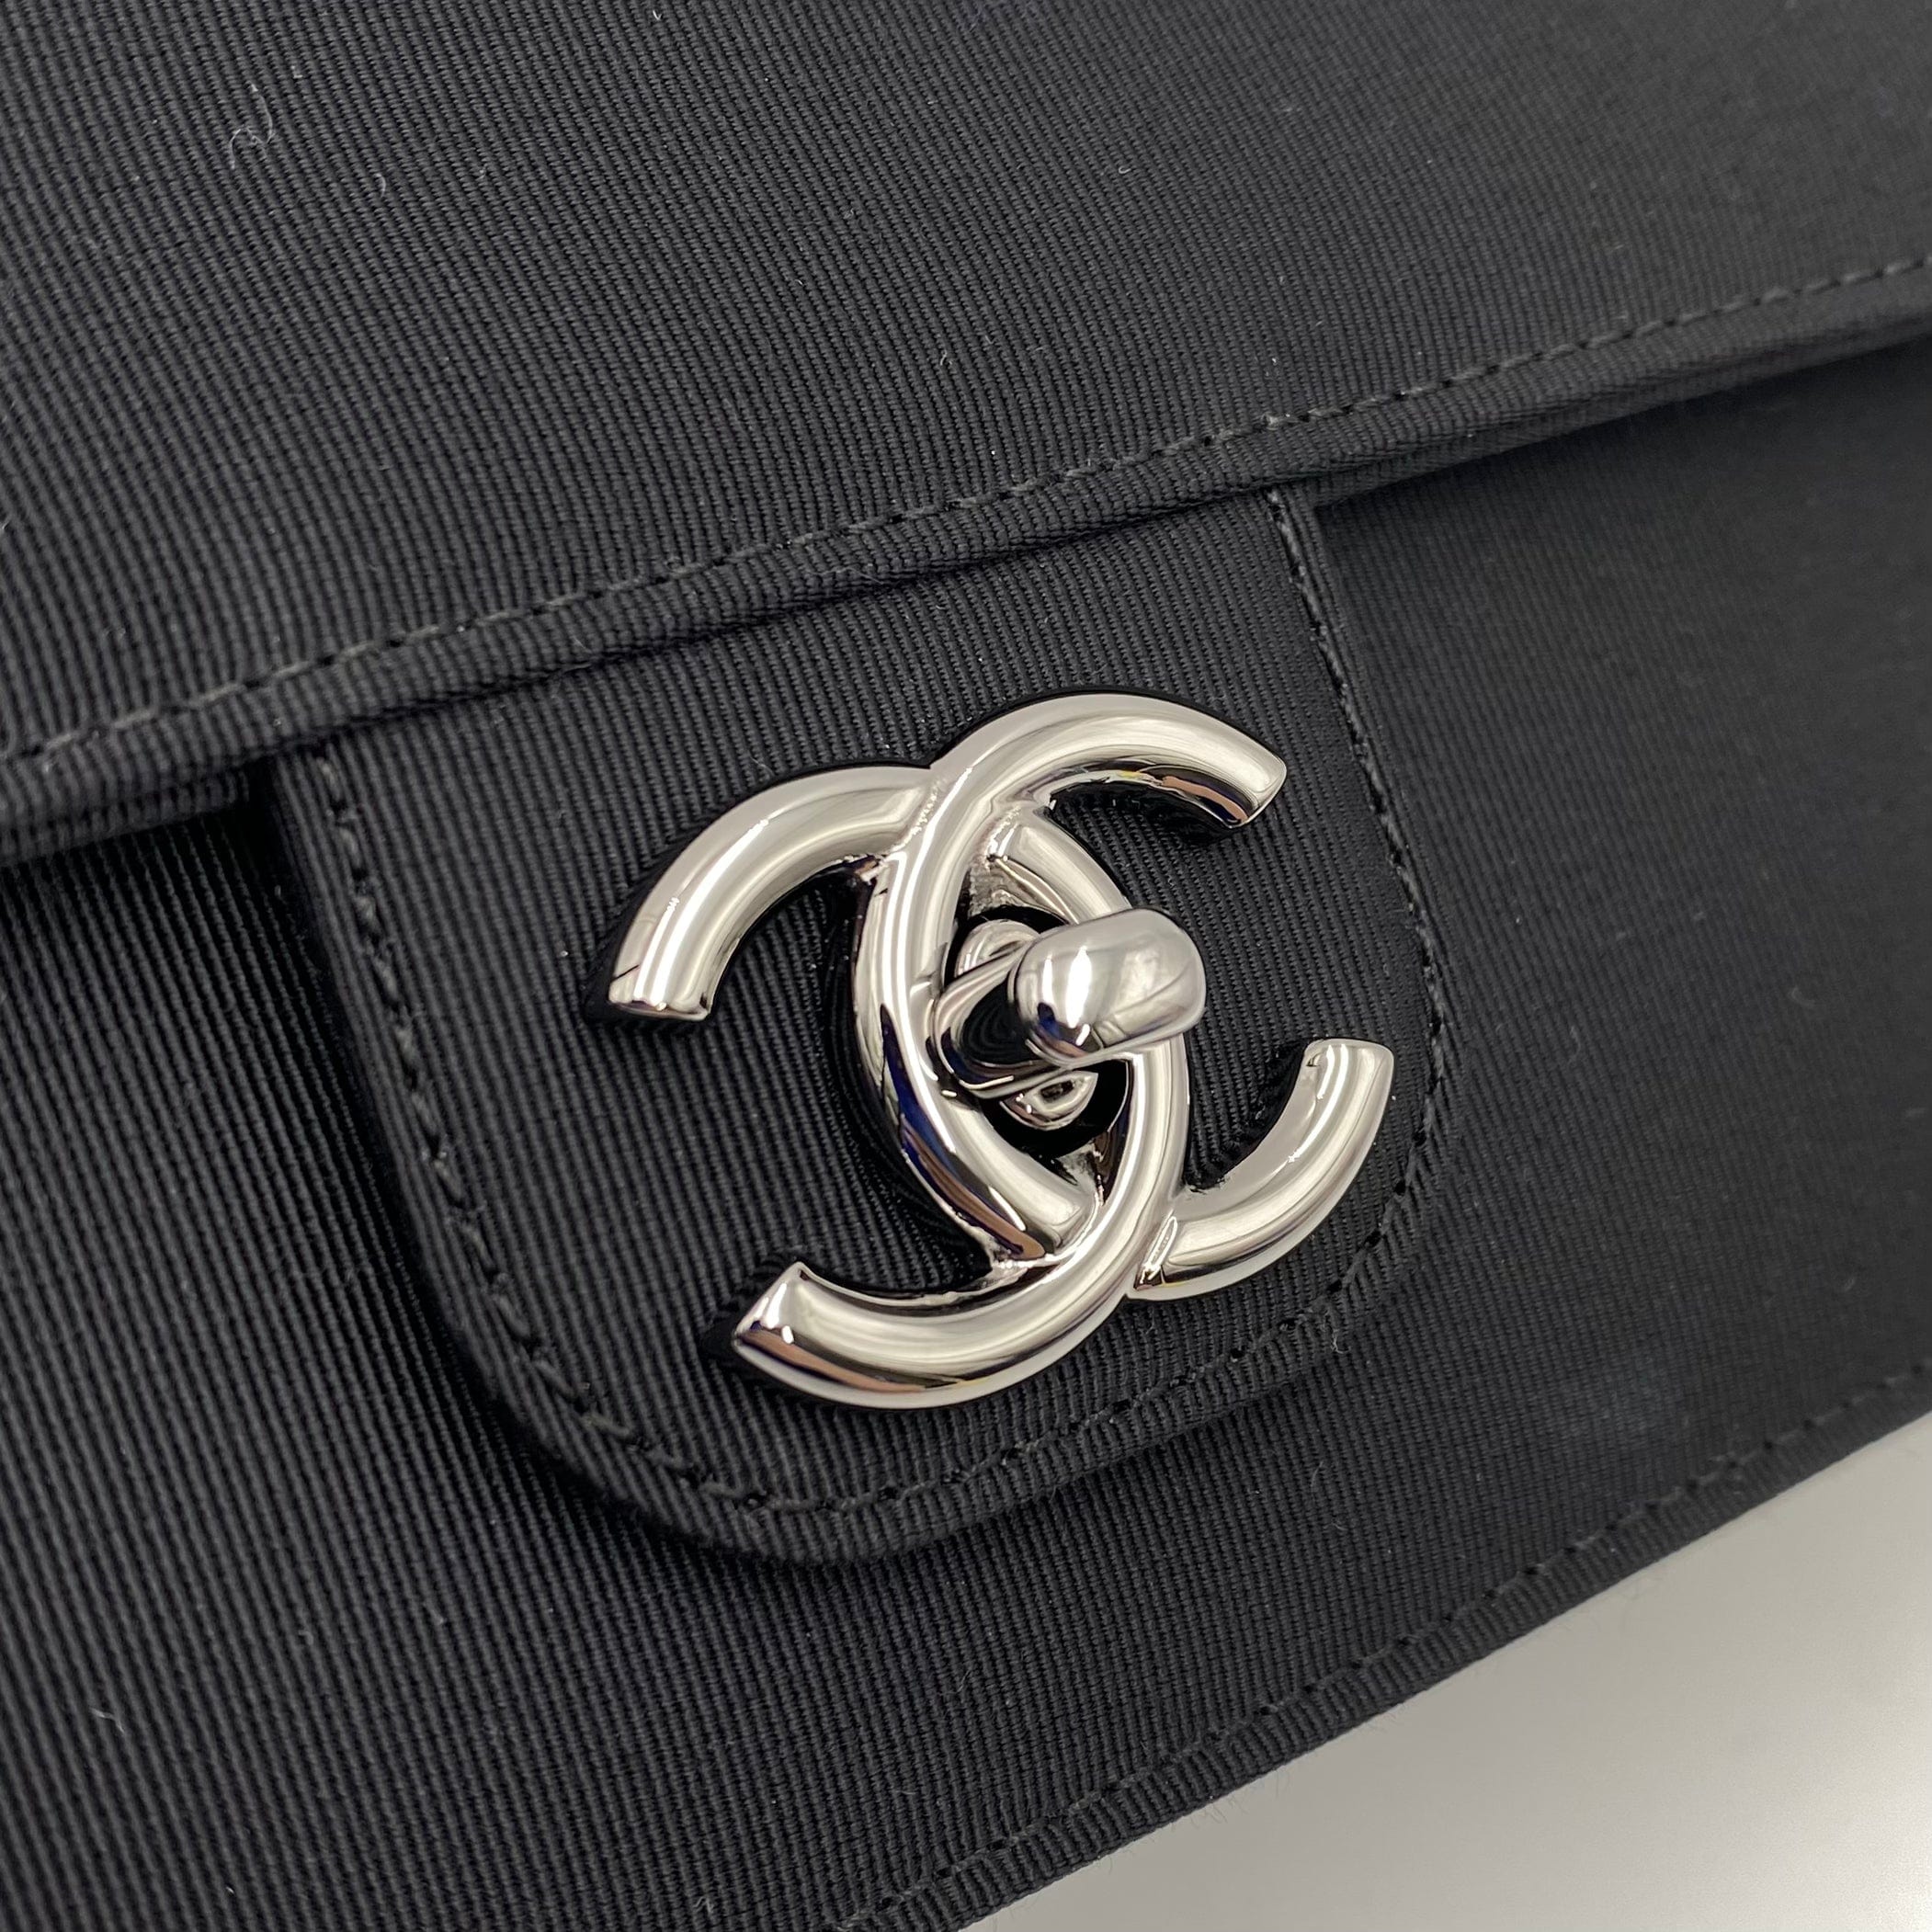 Chanel CHANEL VINTAGE PARTY CHAIN SHOULDER BAG BLACK CANVAS 90221004